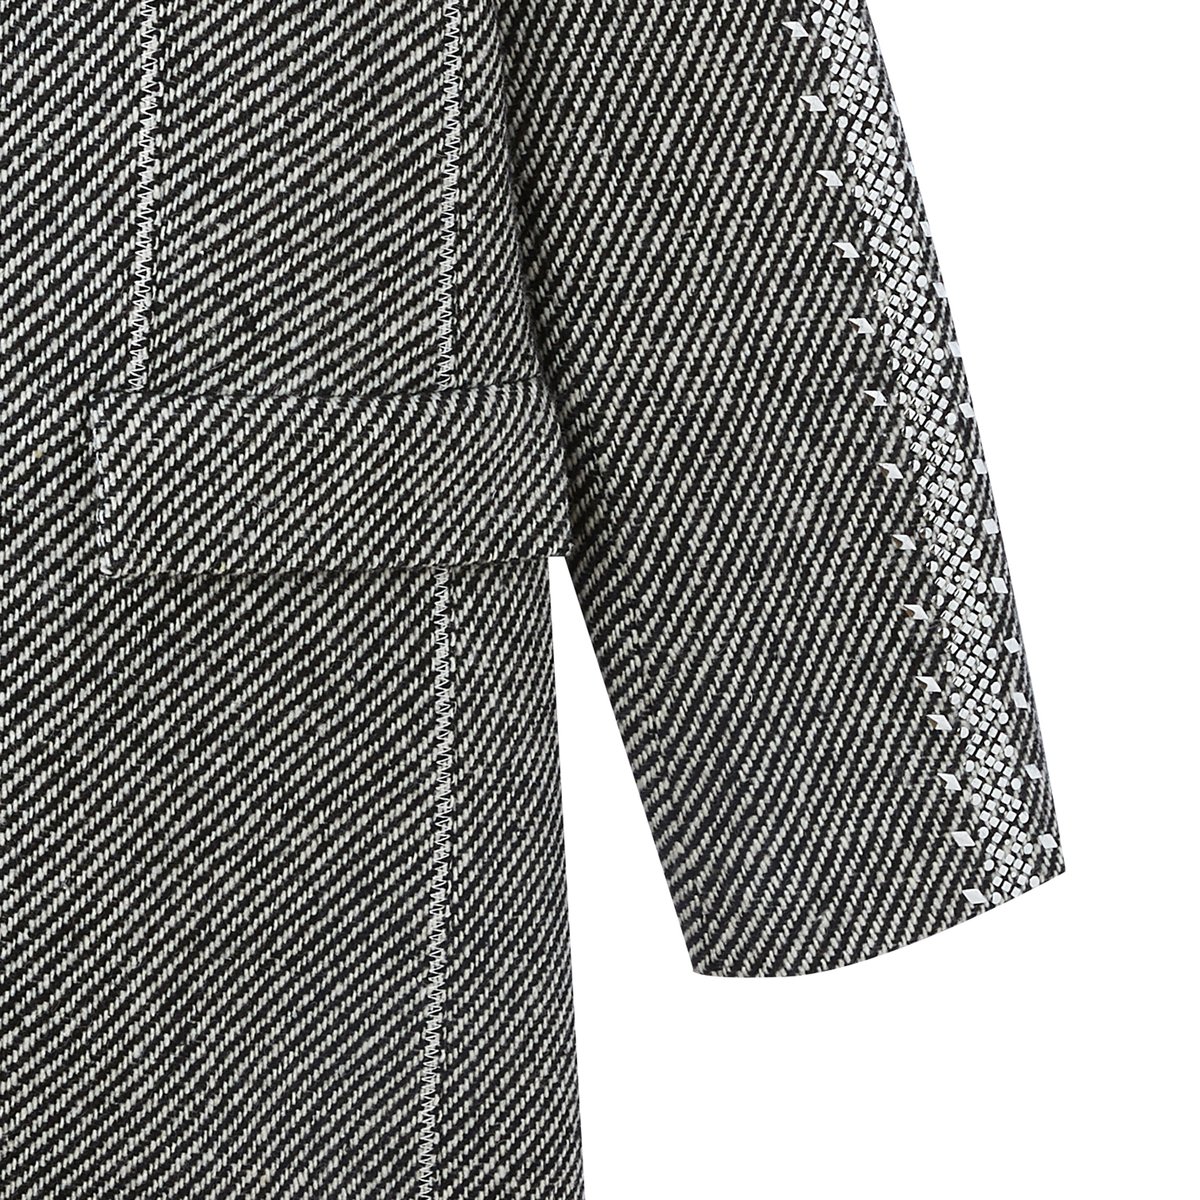 Пальто La Redoute Прямое унисекс 36 (FR) - 42 (RUS) серый, размер 36 (FR) - 42 (RUS) Прямое унисекс 36 (FR) - 42 (RUS) серый - фото 3